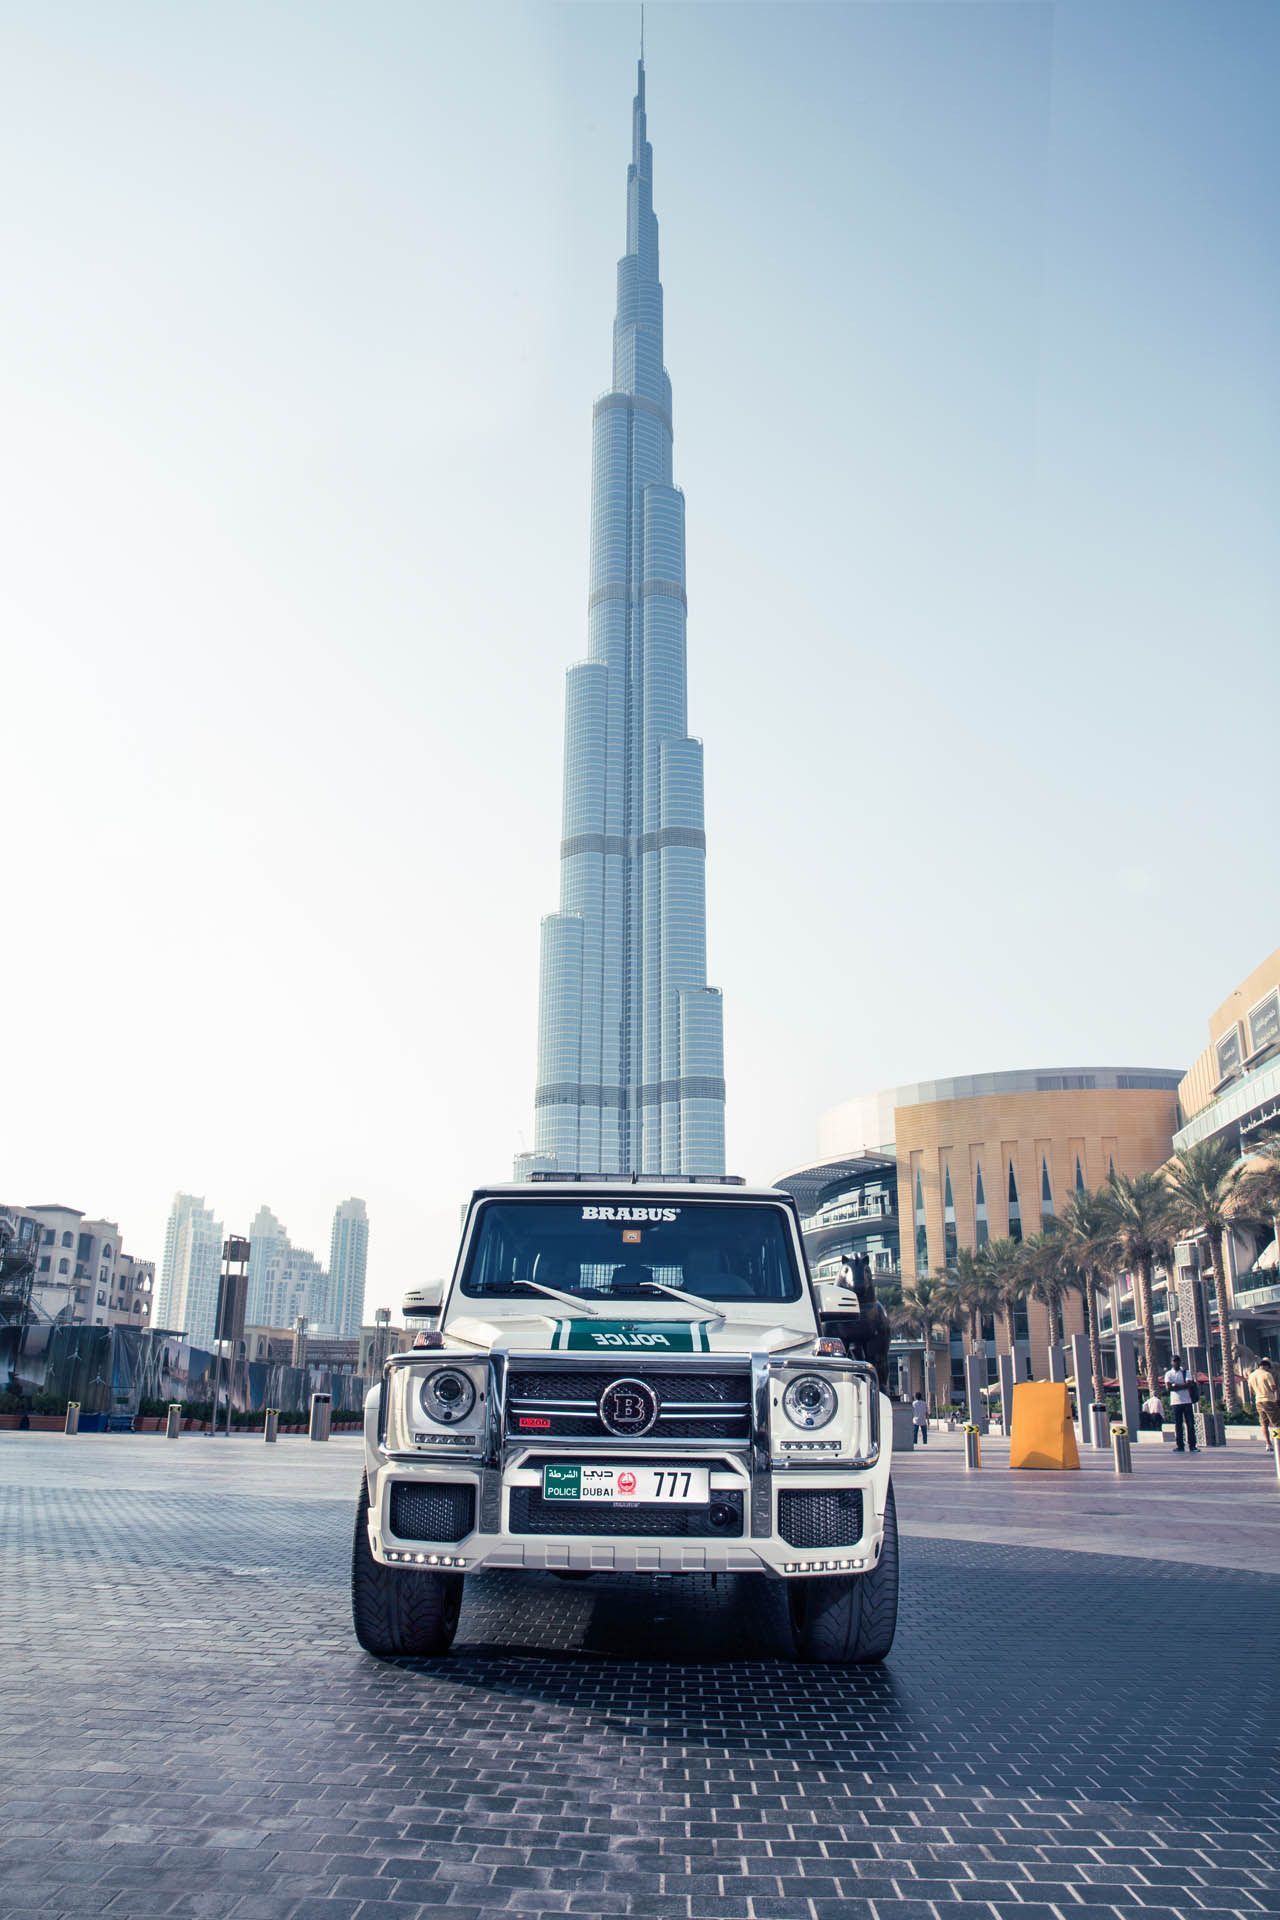 Burj Khalifa Dubai HD Wallpapers & Pictures HD Wallapers for Free